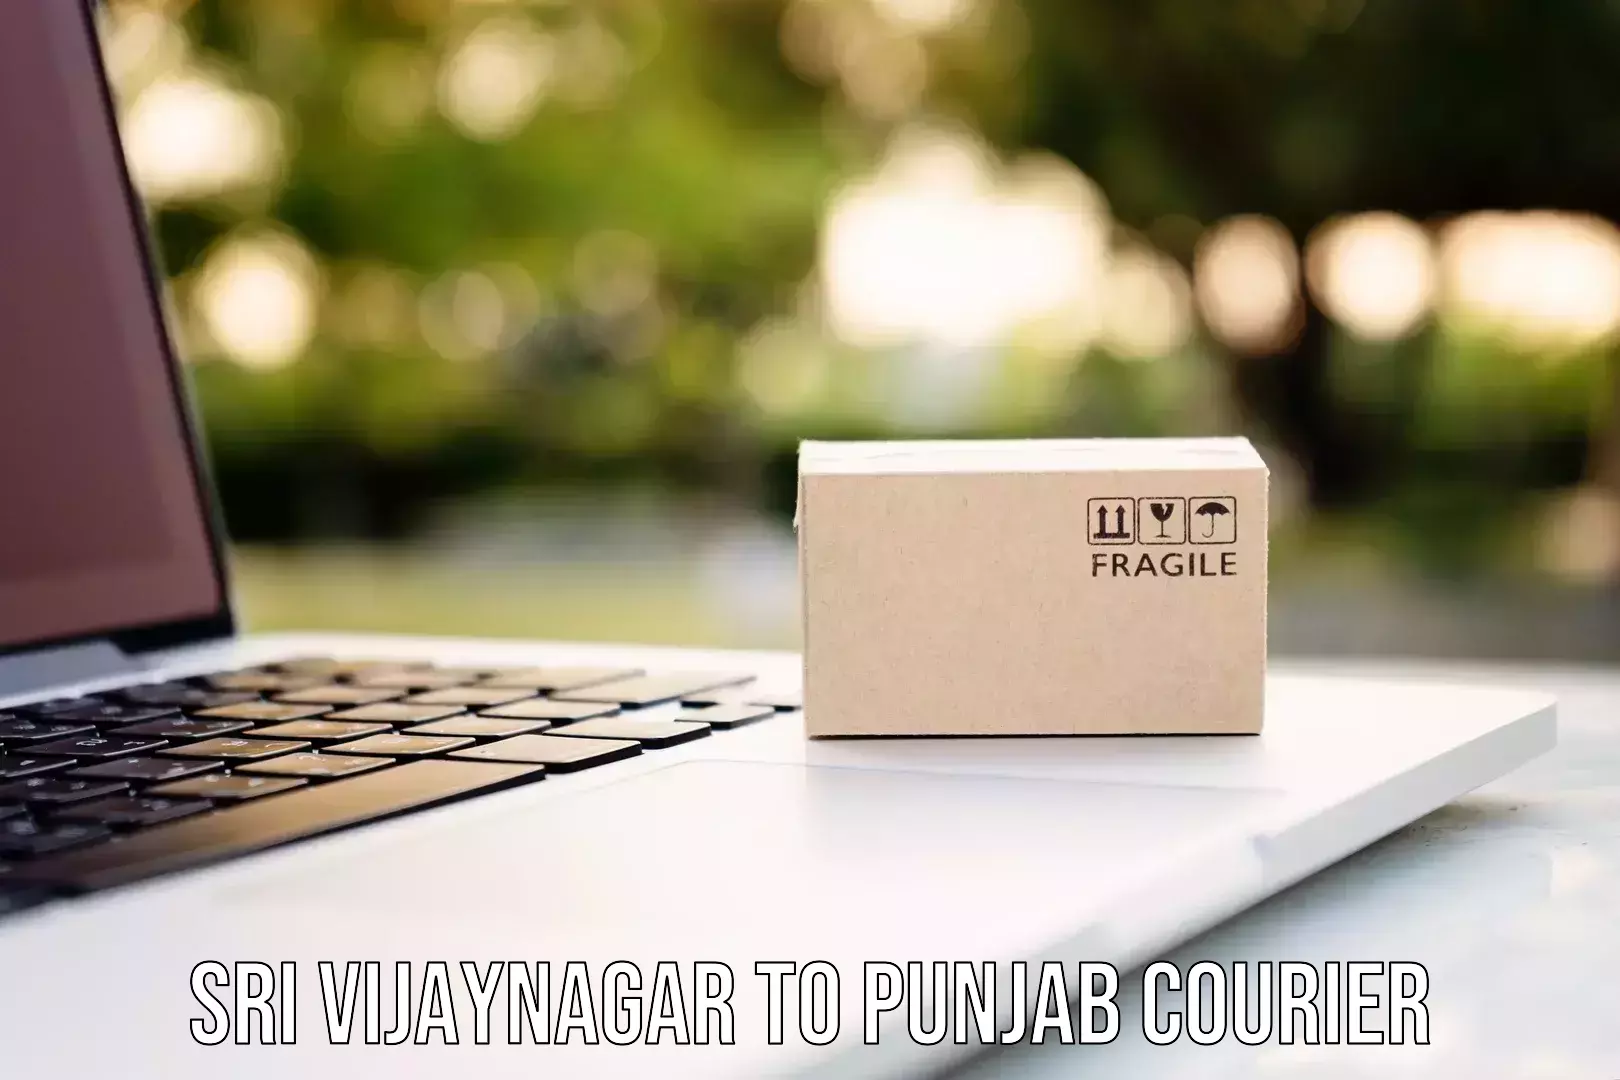 Courier service efficiency Sri Vijaynagar to Patiala